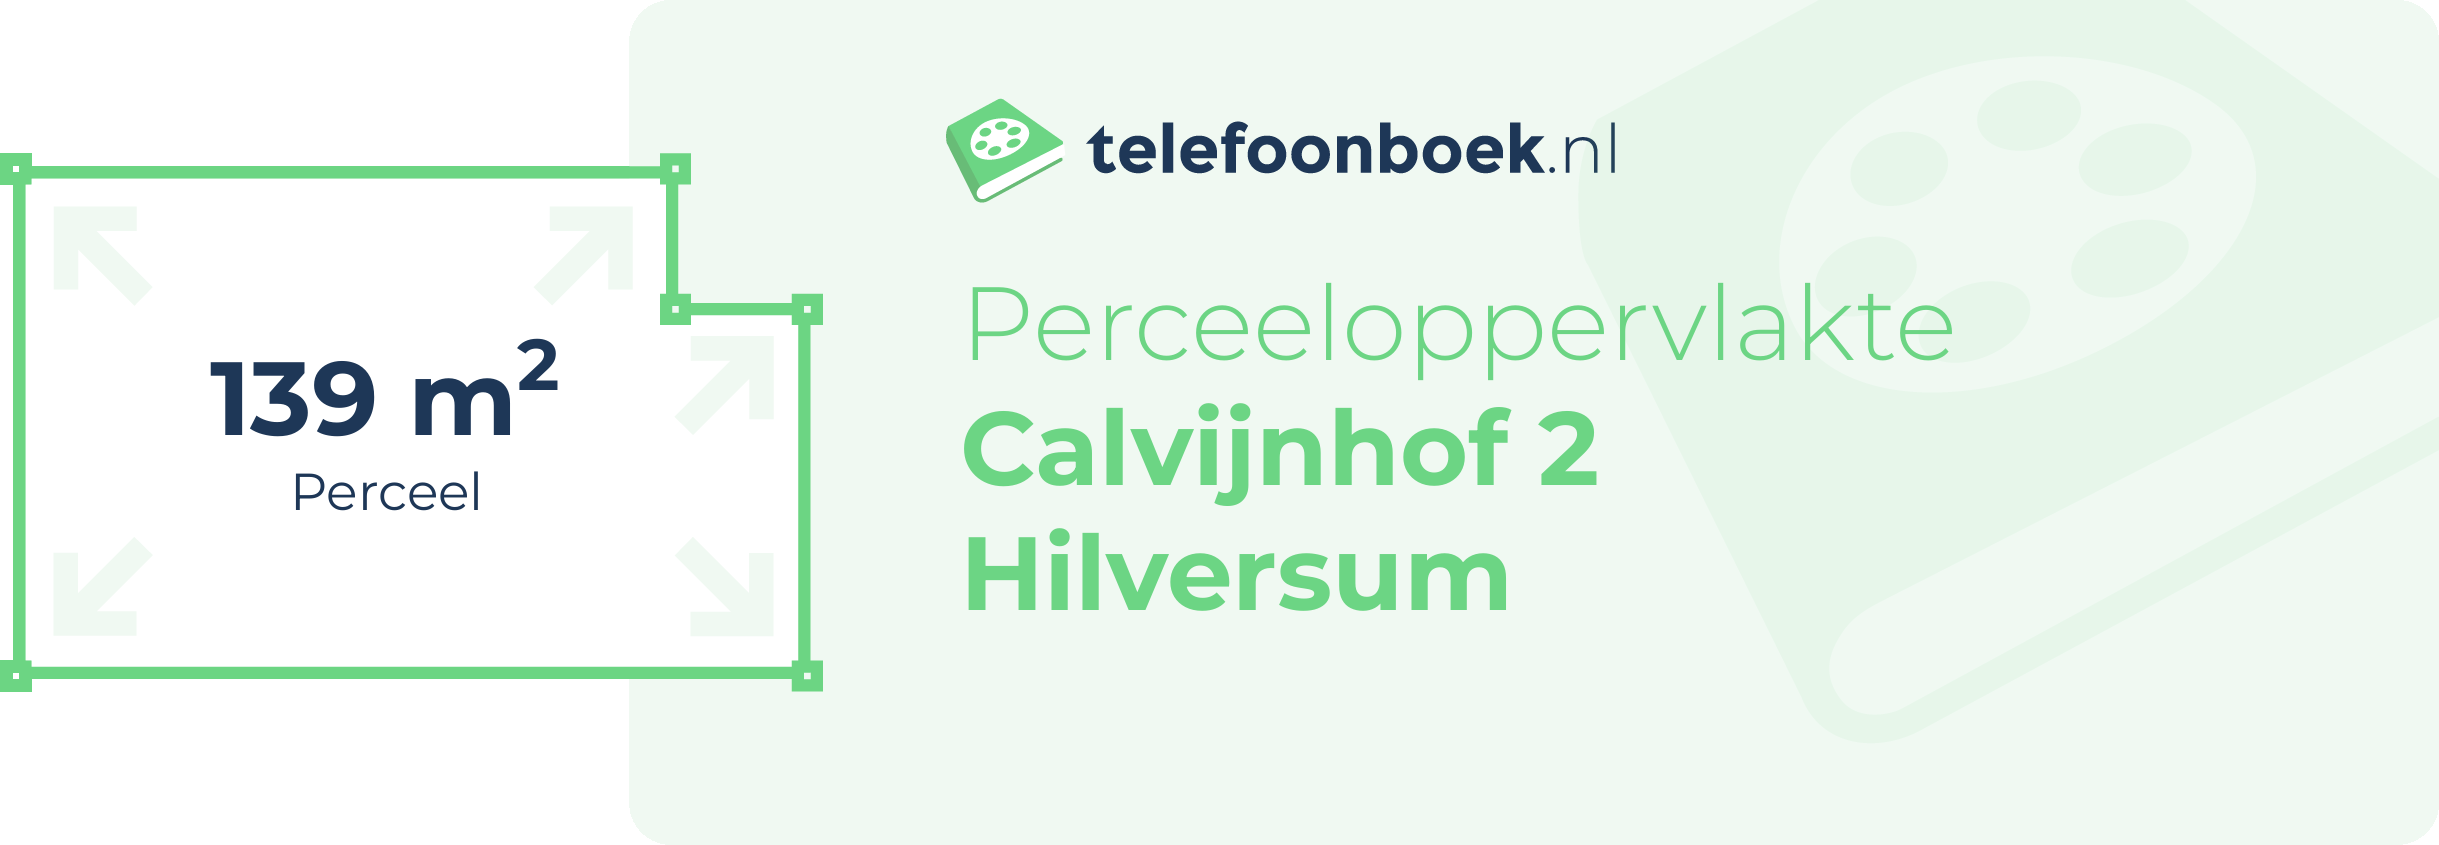 Perceeloppervlakte Calvijnhof 2 Hilversum